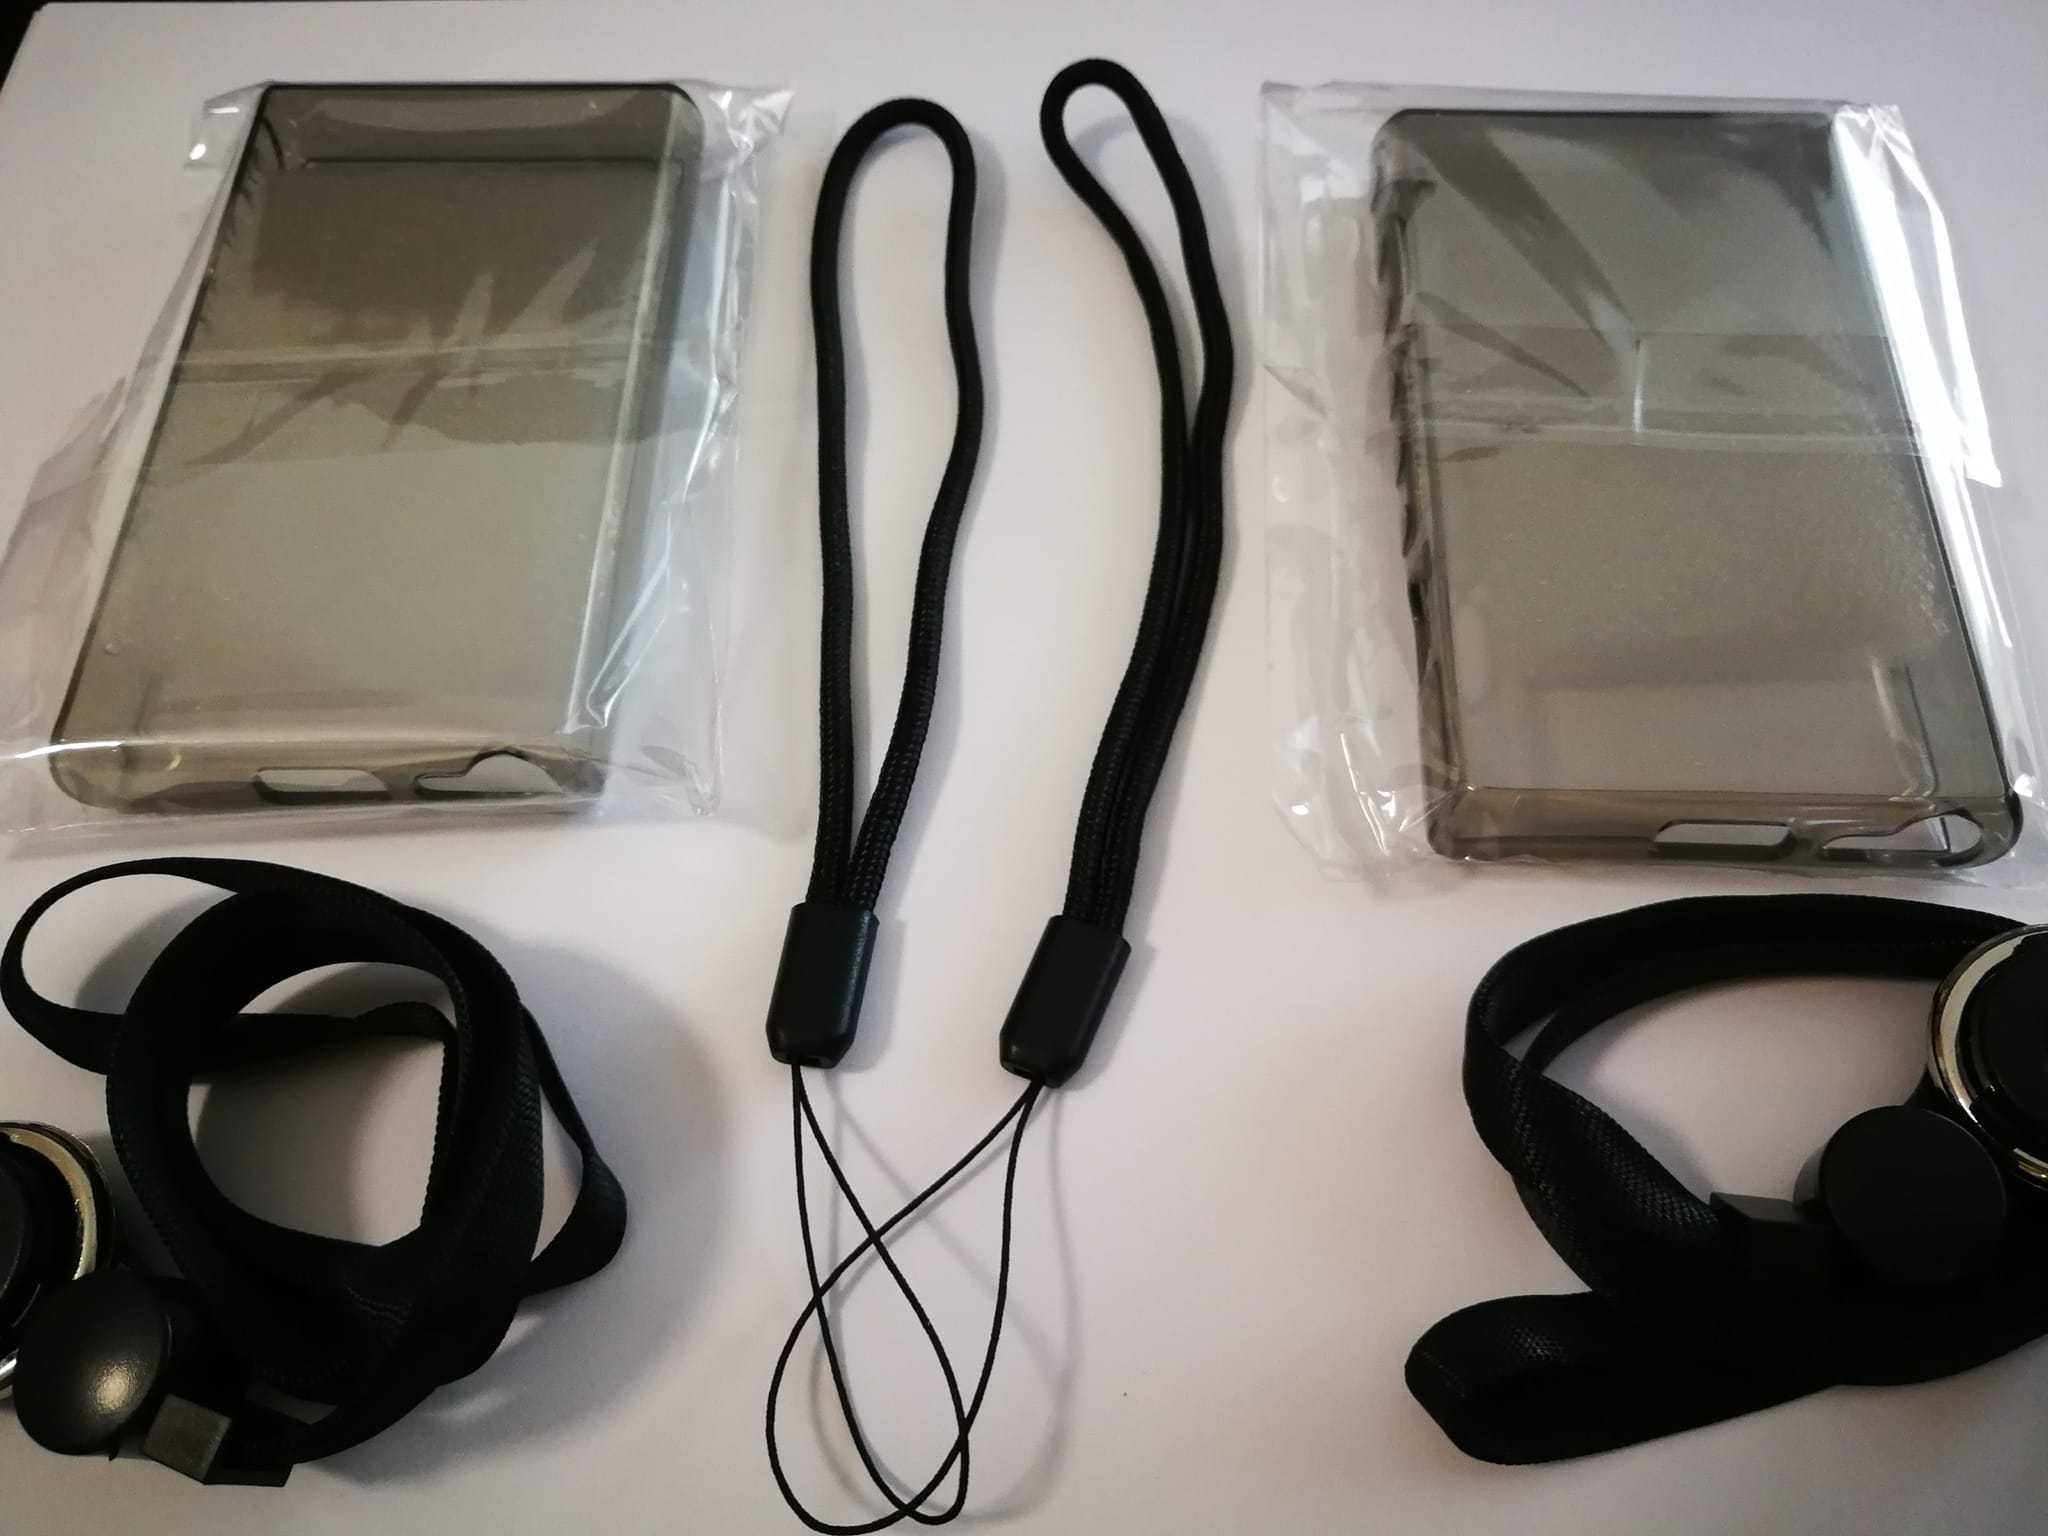 SONY Walkman NW-A105, capa protectora em silicone clear black nova